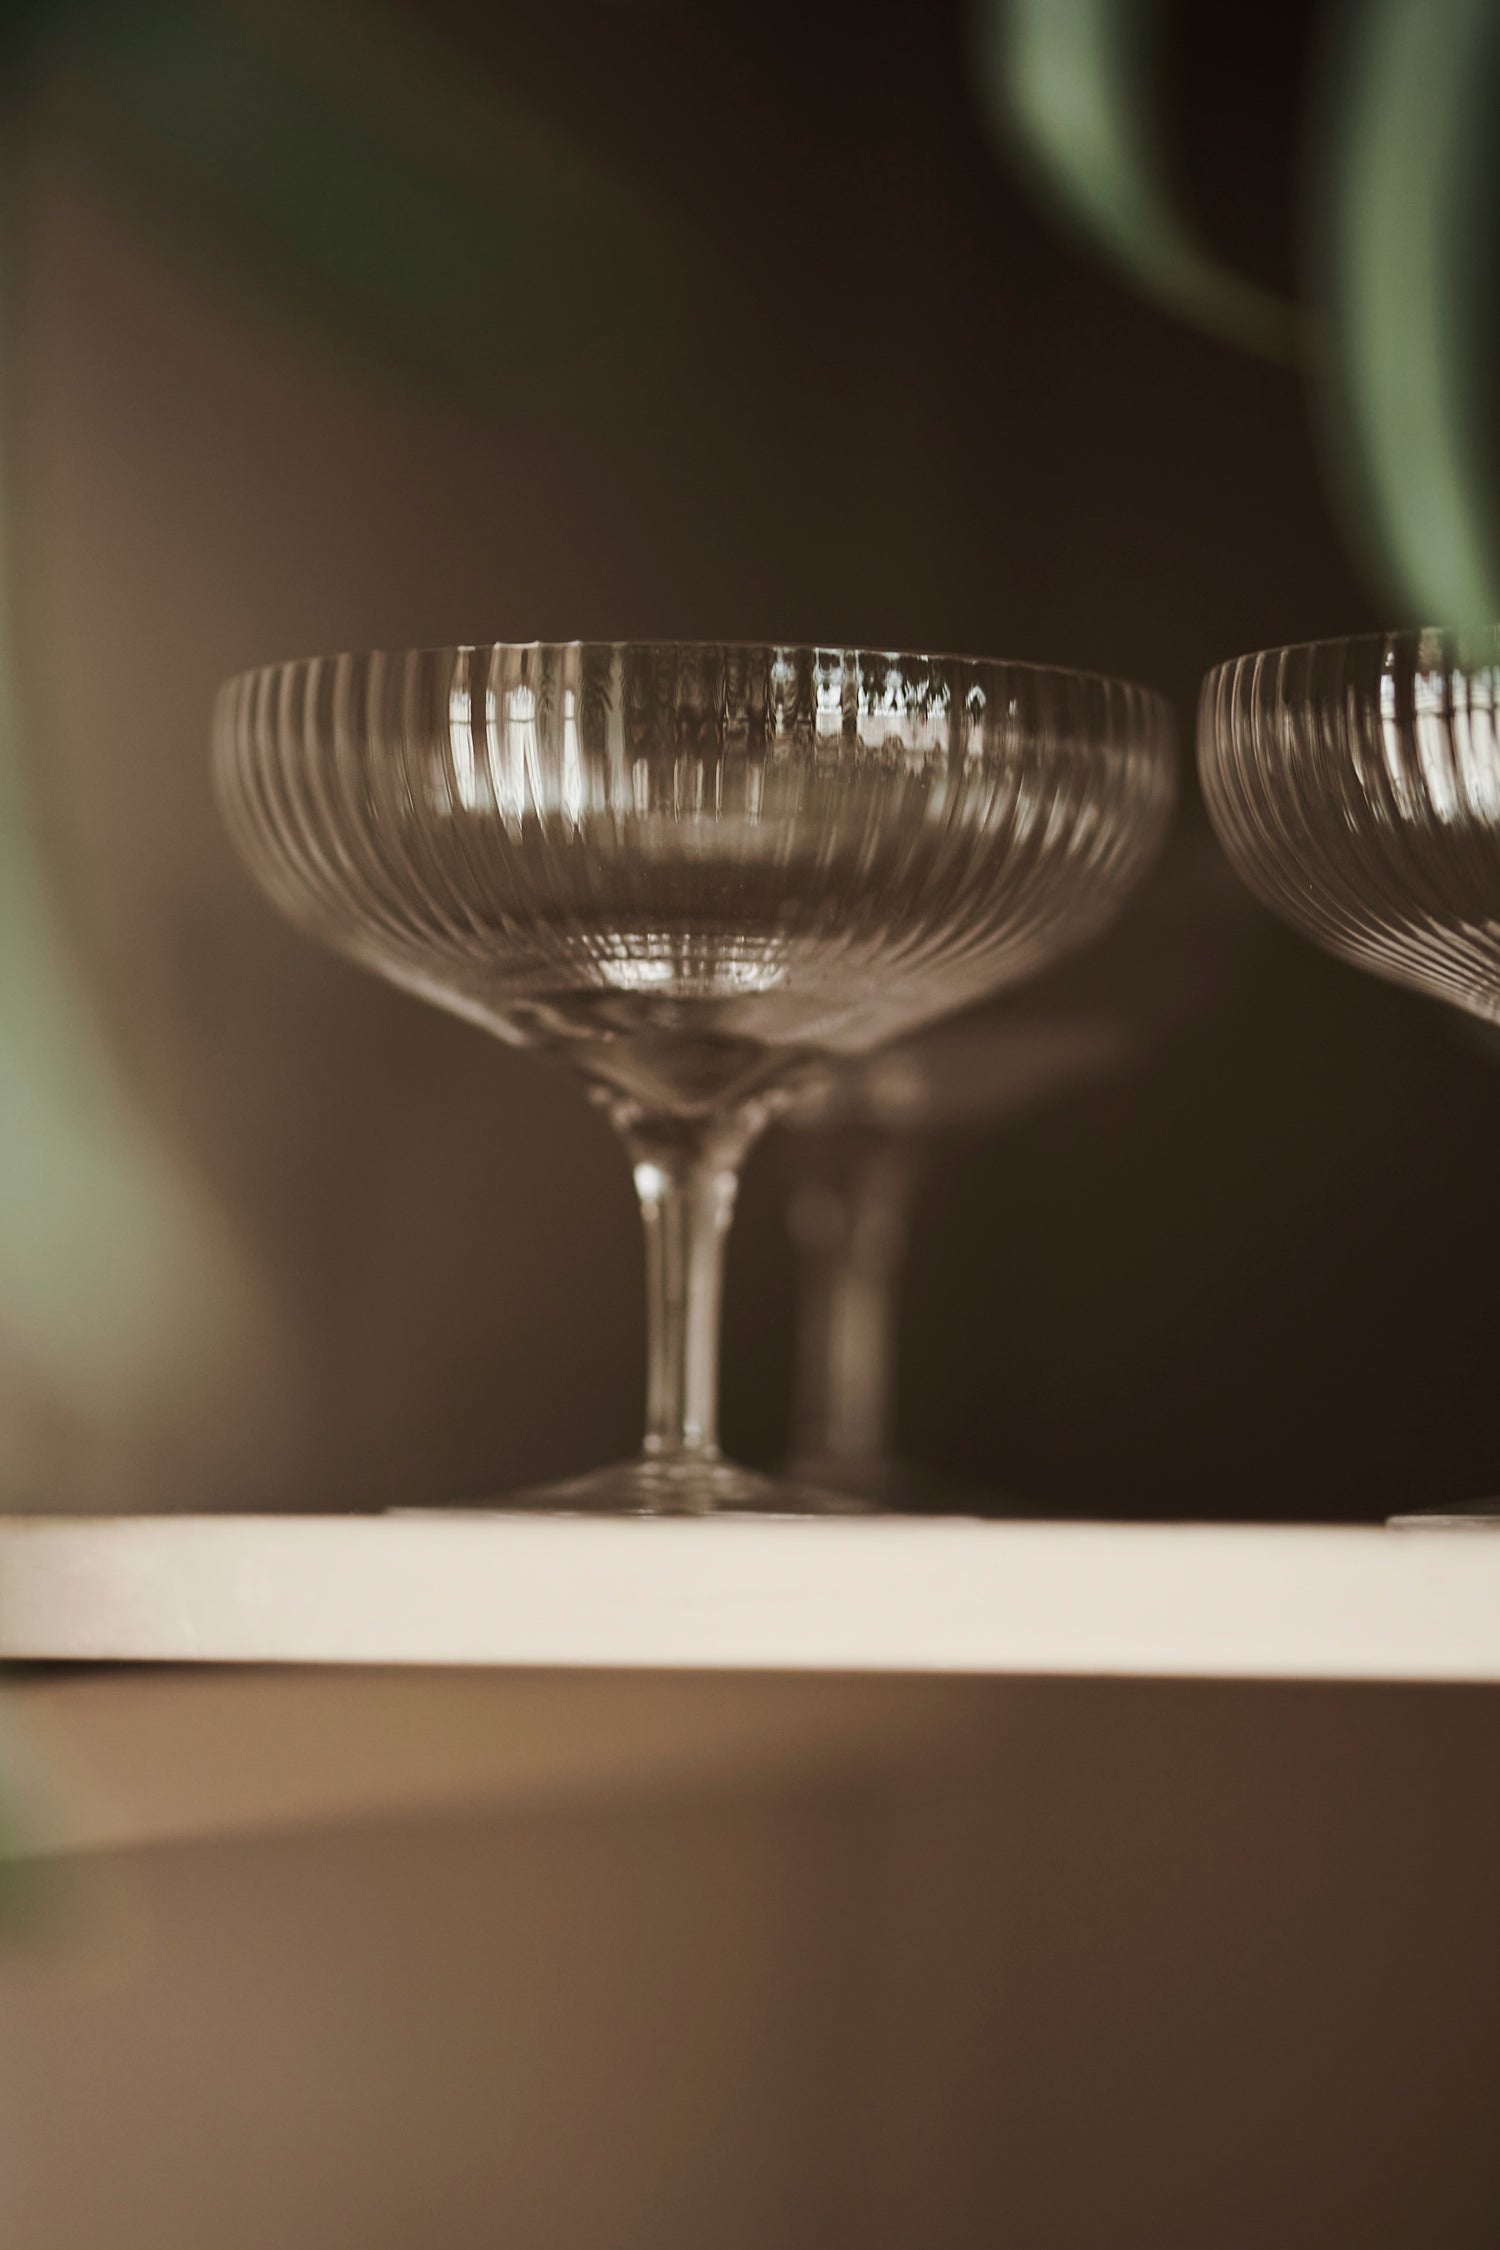 flute a champagne, service verre, design - Pascale Naessens, serax